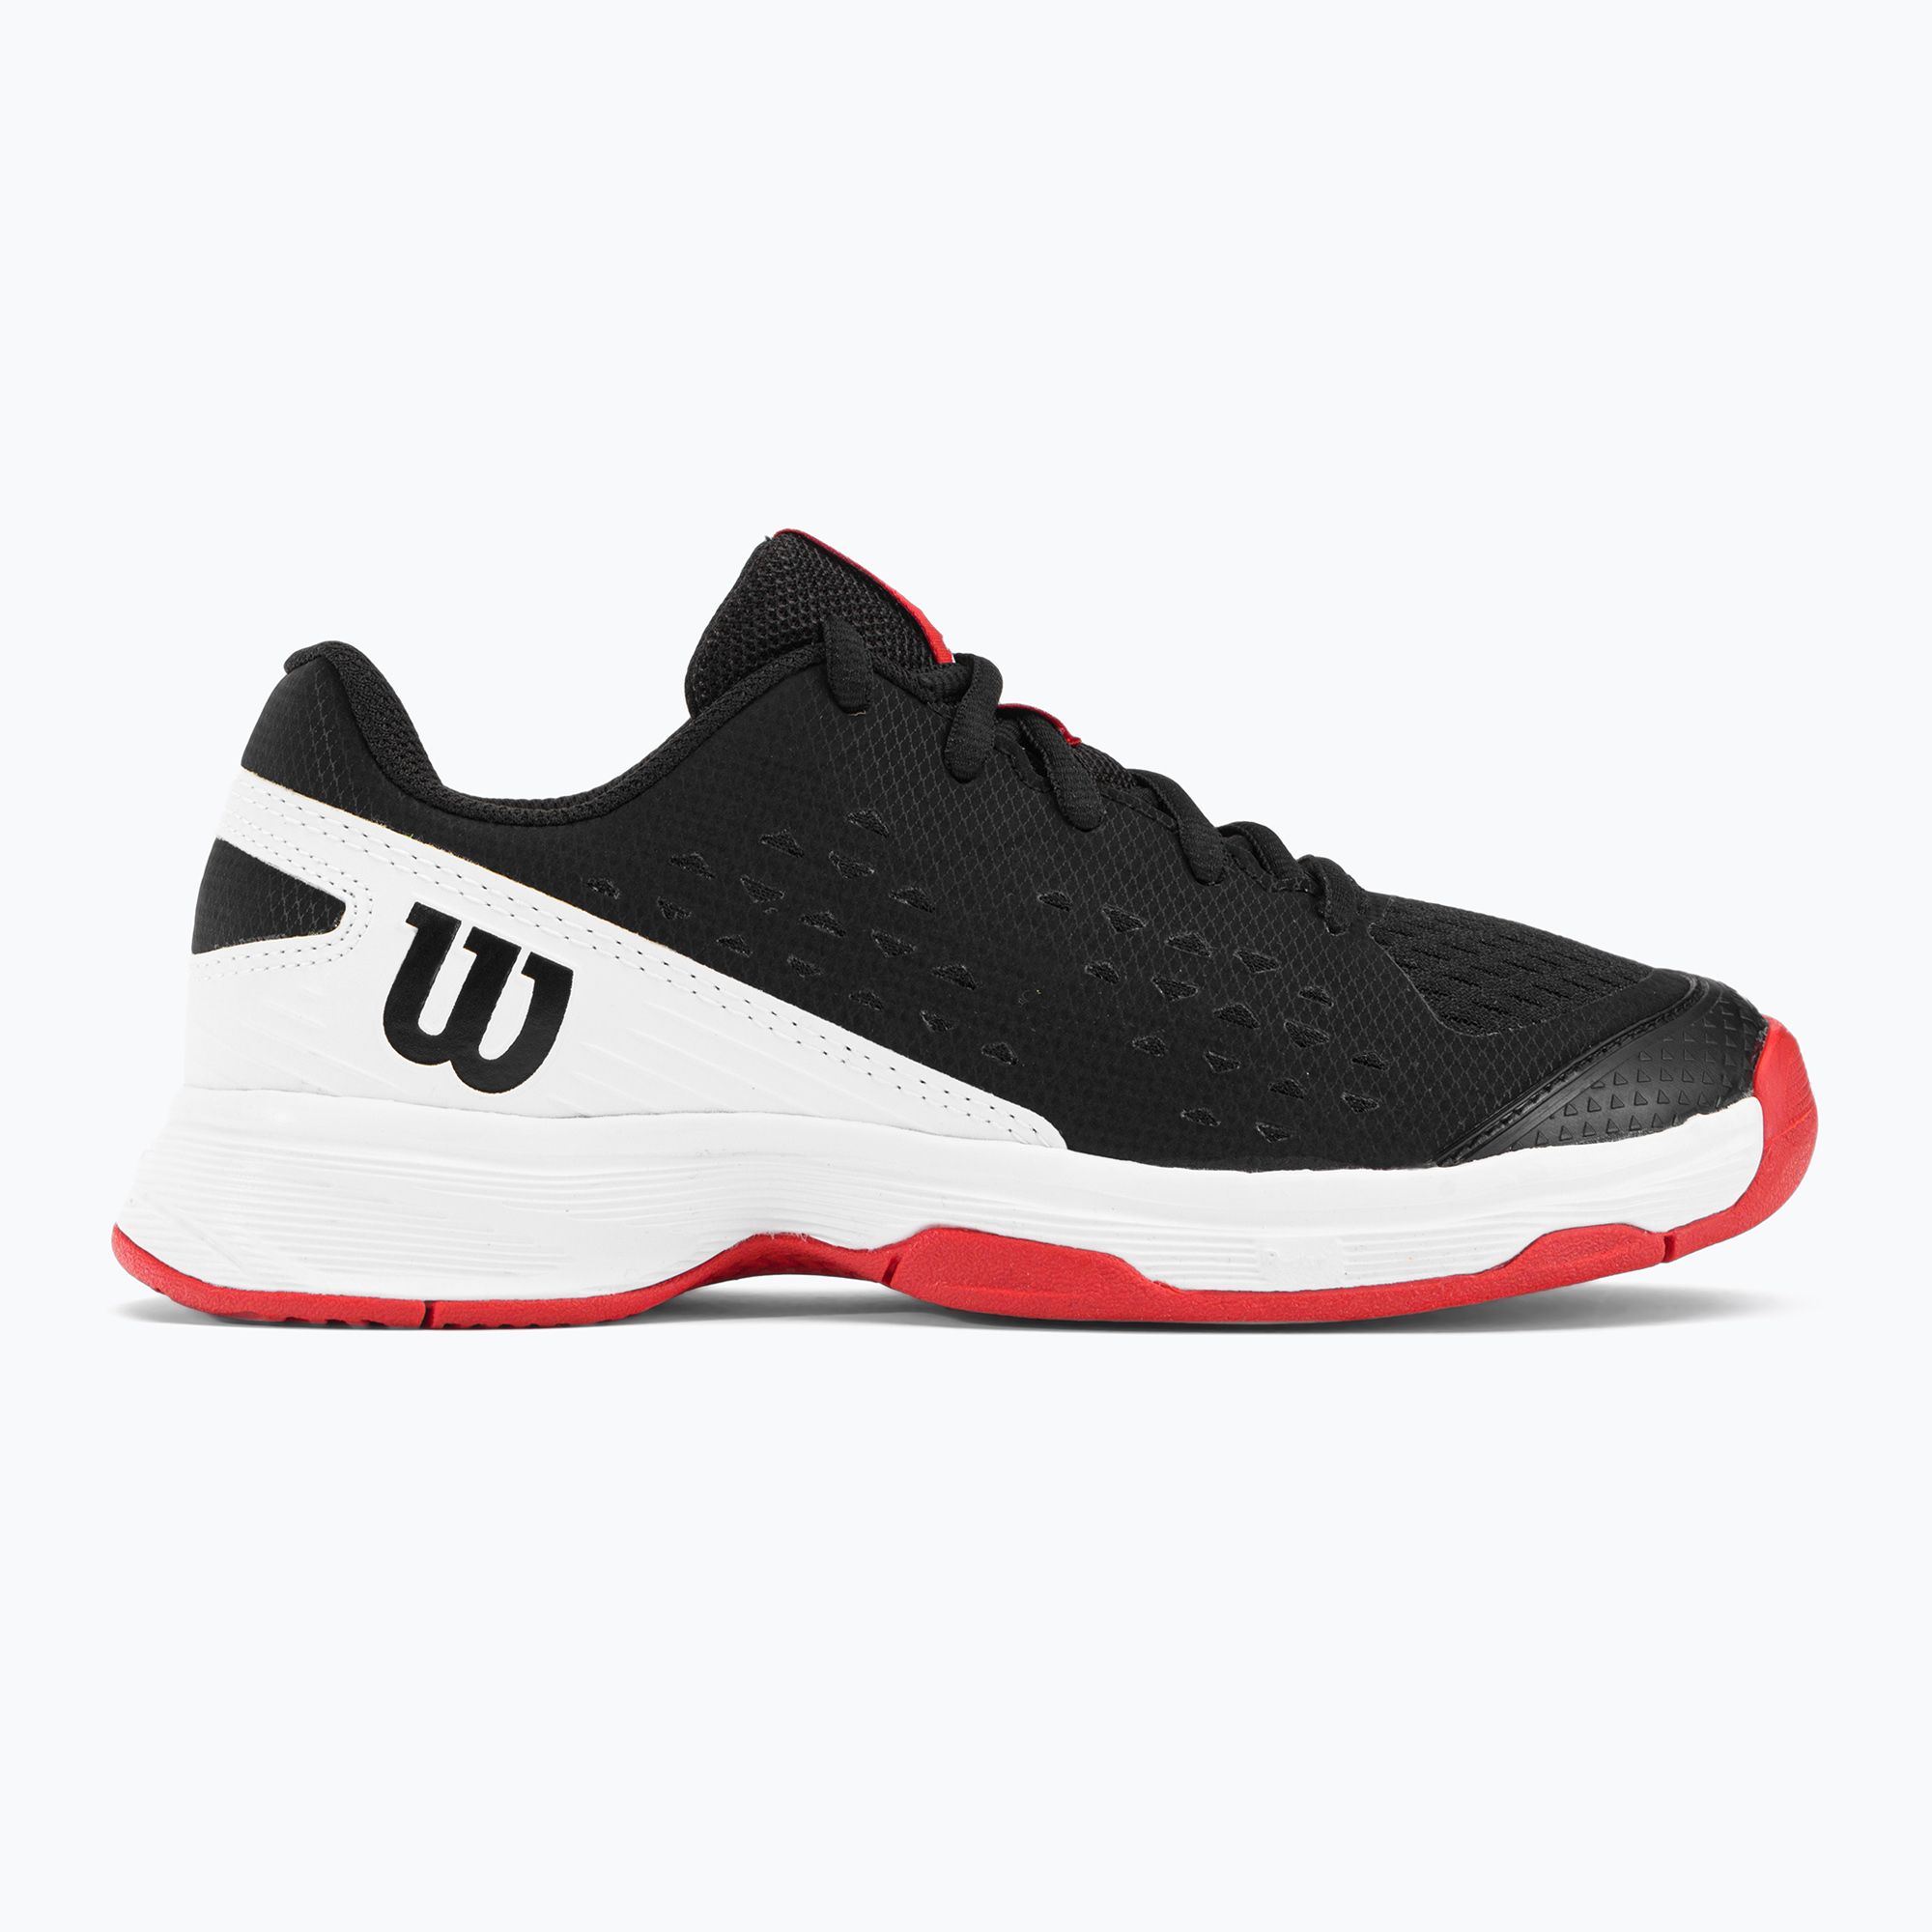 Wilson Kinder Rush Pro JR L Tennisschuh Sandplatzschuh schwarz-weiß-rot Tennis Schuhe Kinder MAM-SPORT von Sportler zu Sportler